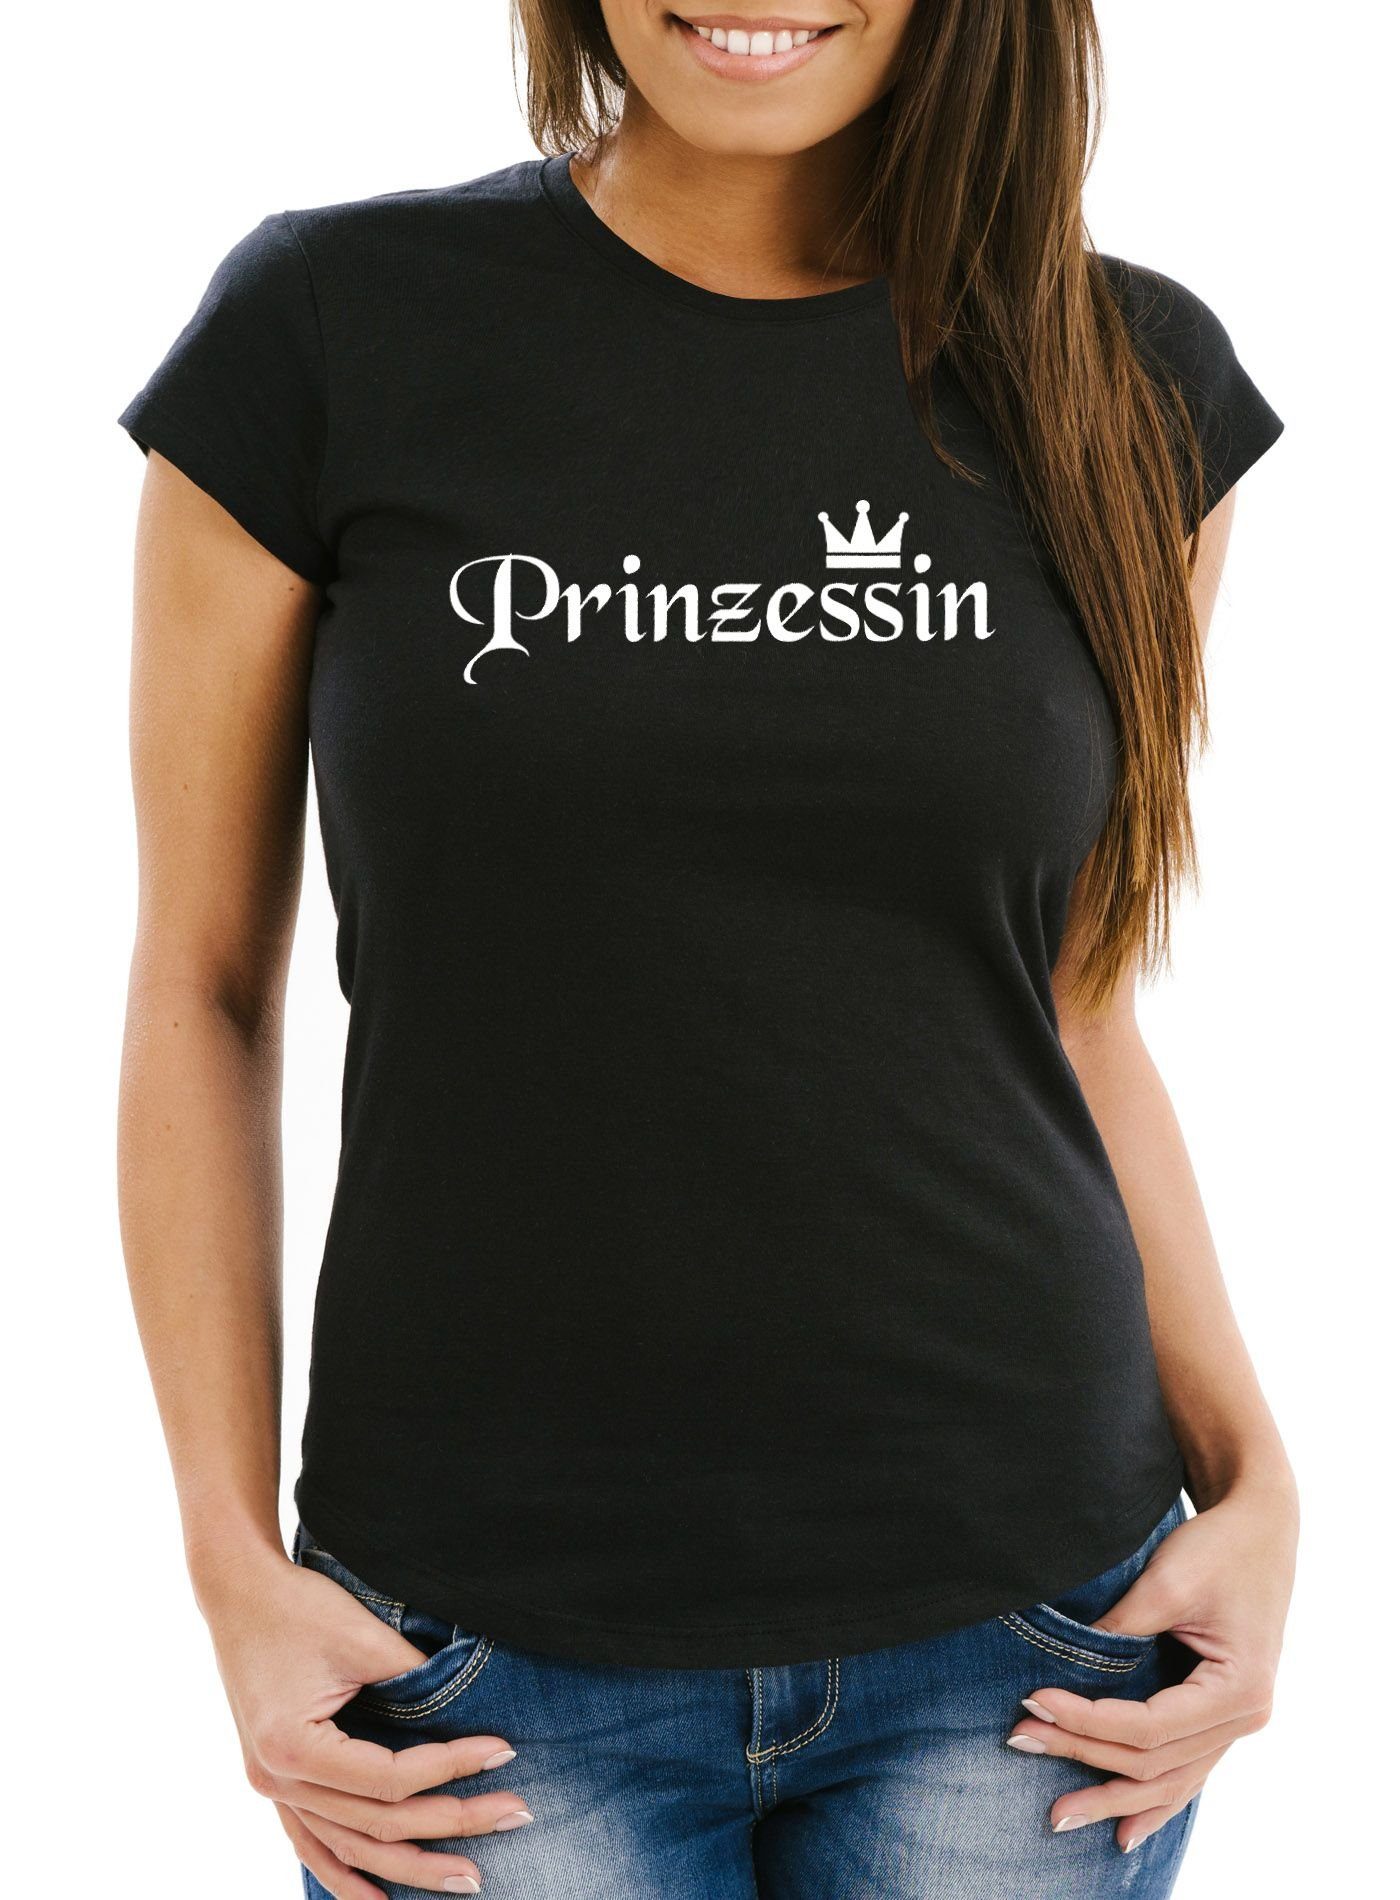 Krone Princess schwarz Slim mit Fit Damen MoonWorks Crown Print Prinzessin T-Shirt Print-Shirt Moonworks®